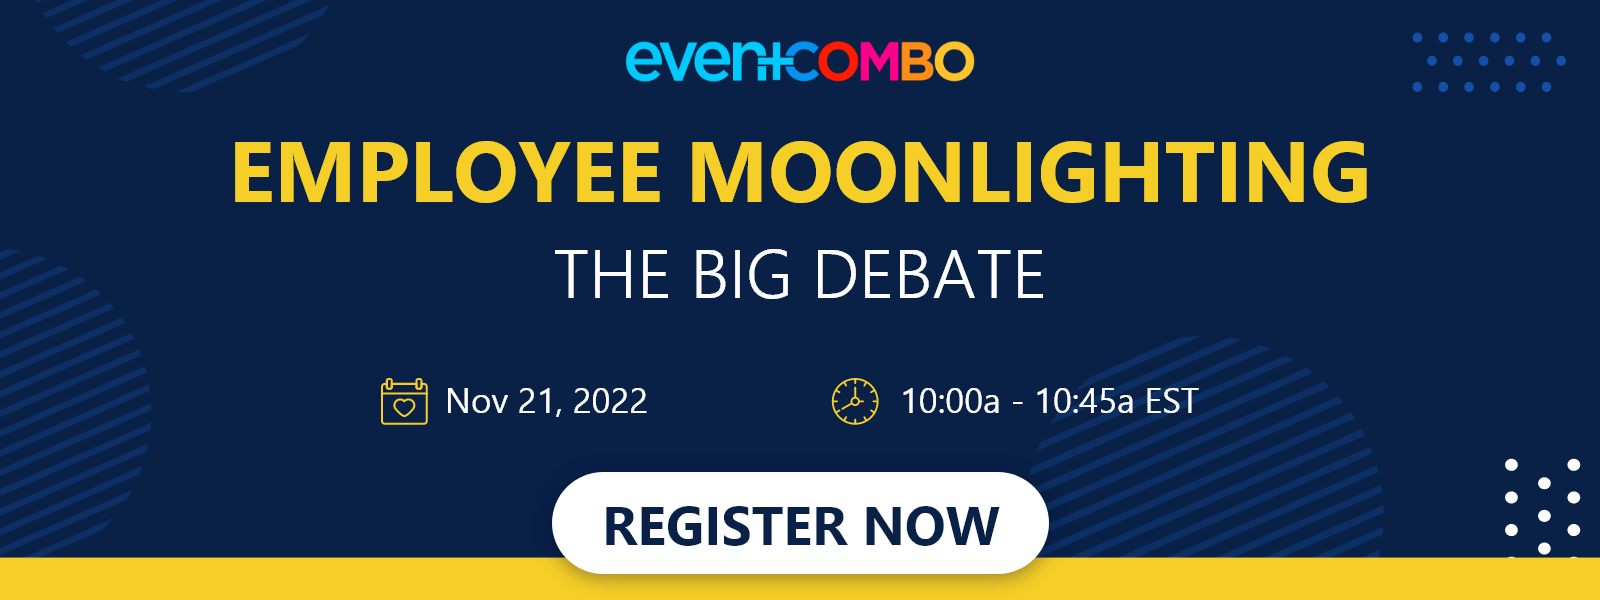 Employee Moonlighting: The Big Debate